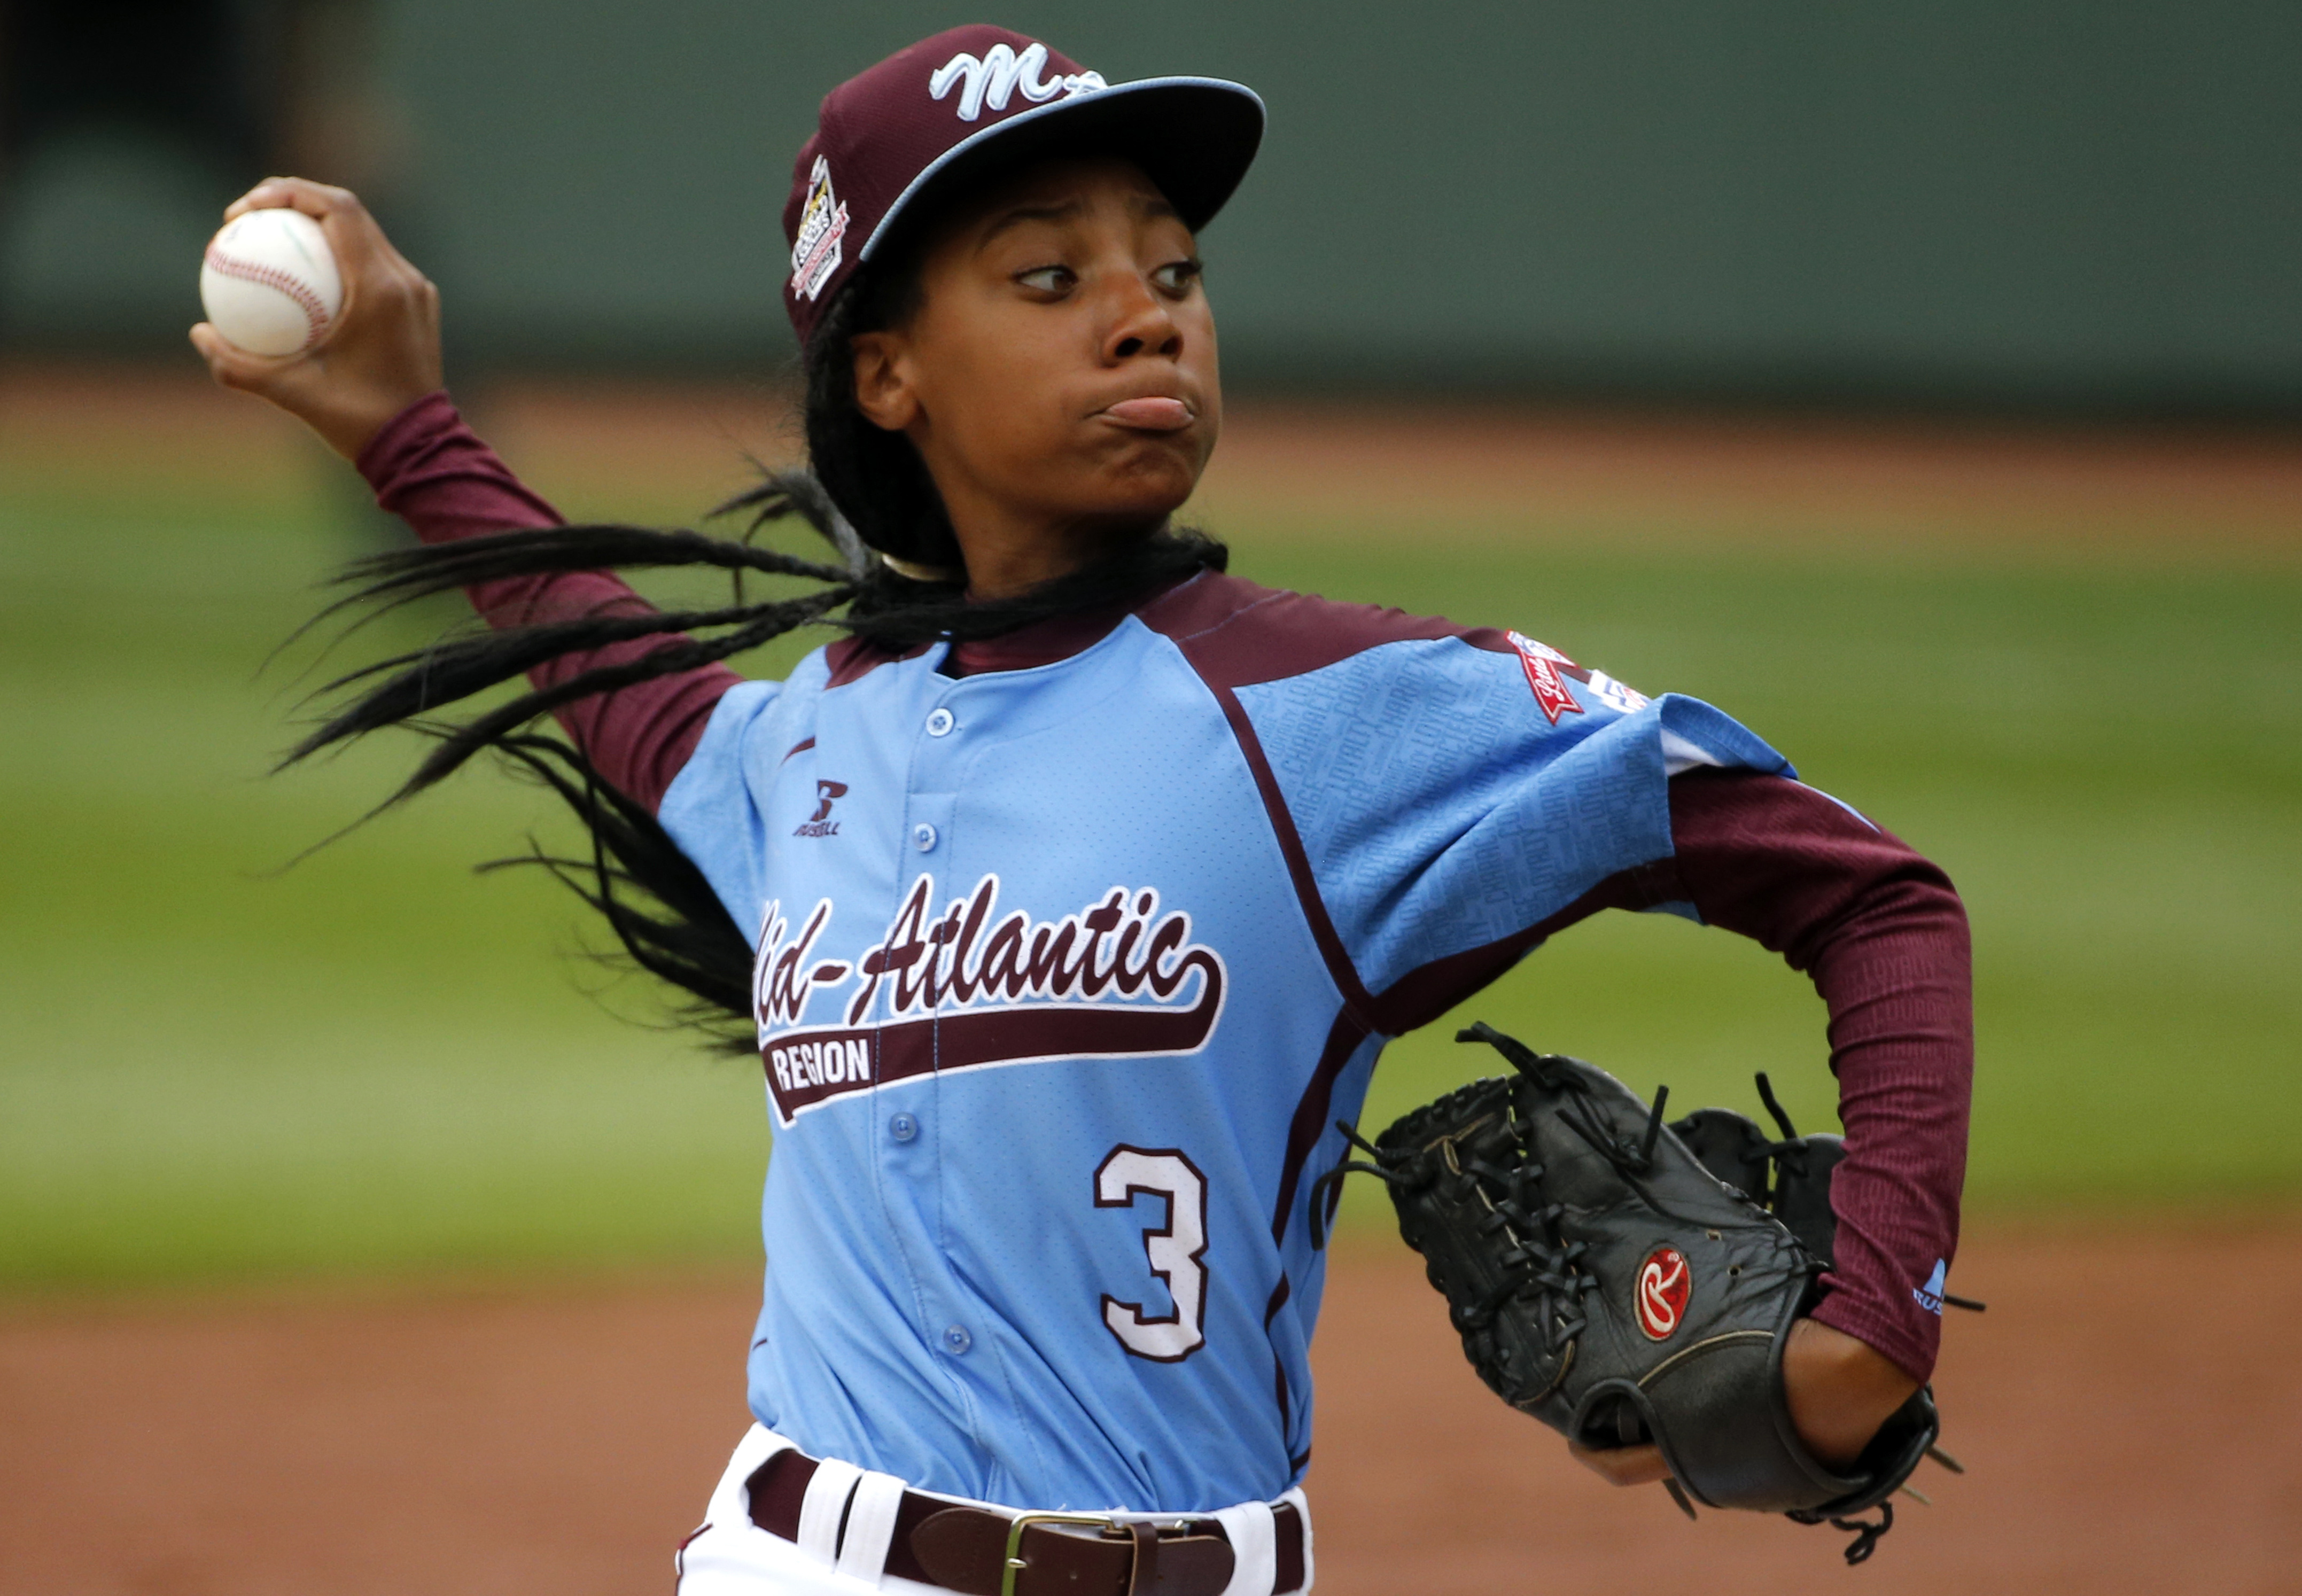 Mo'ne Davis, Little League World Series Star, Shows Girls Can Play